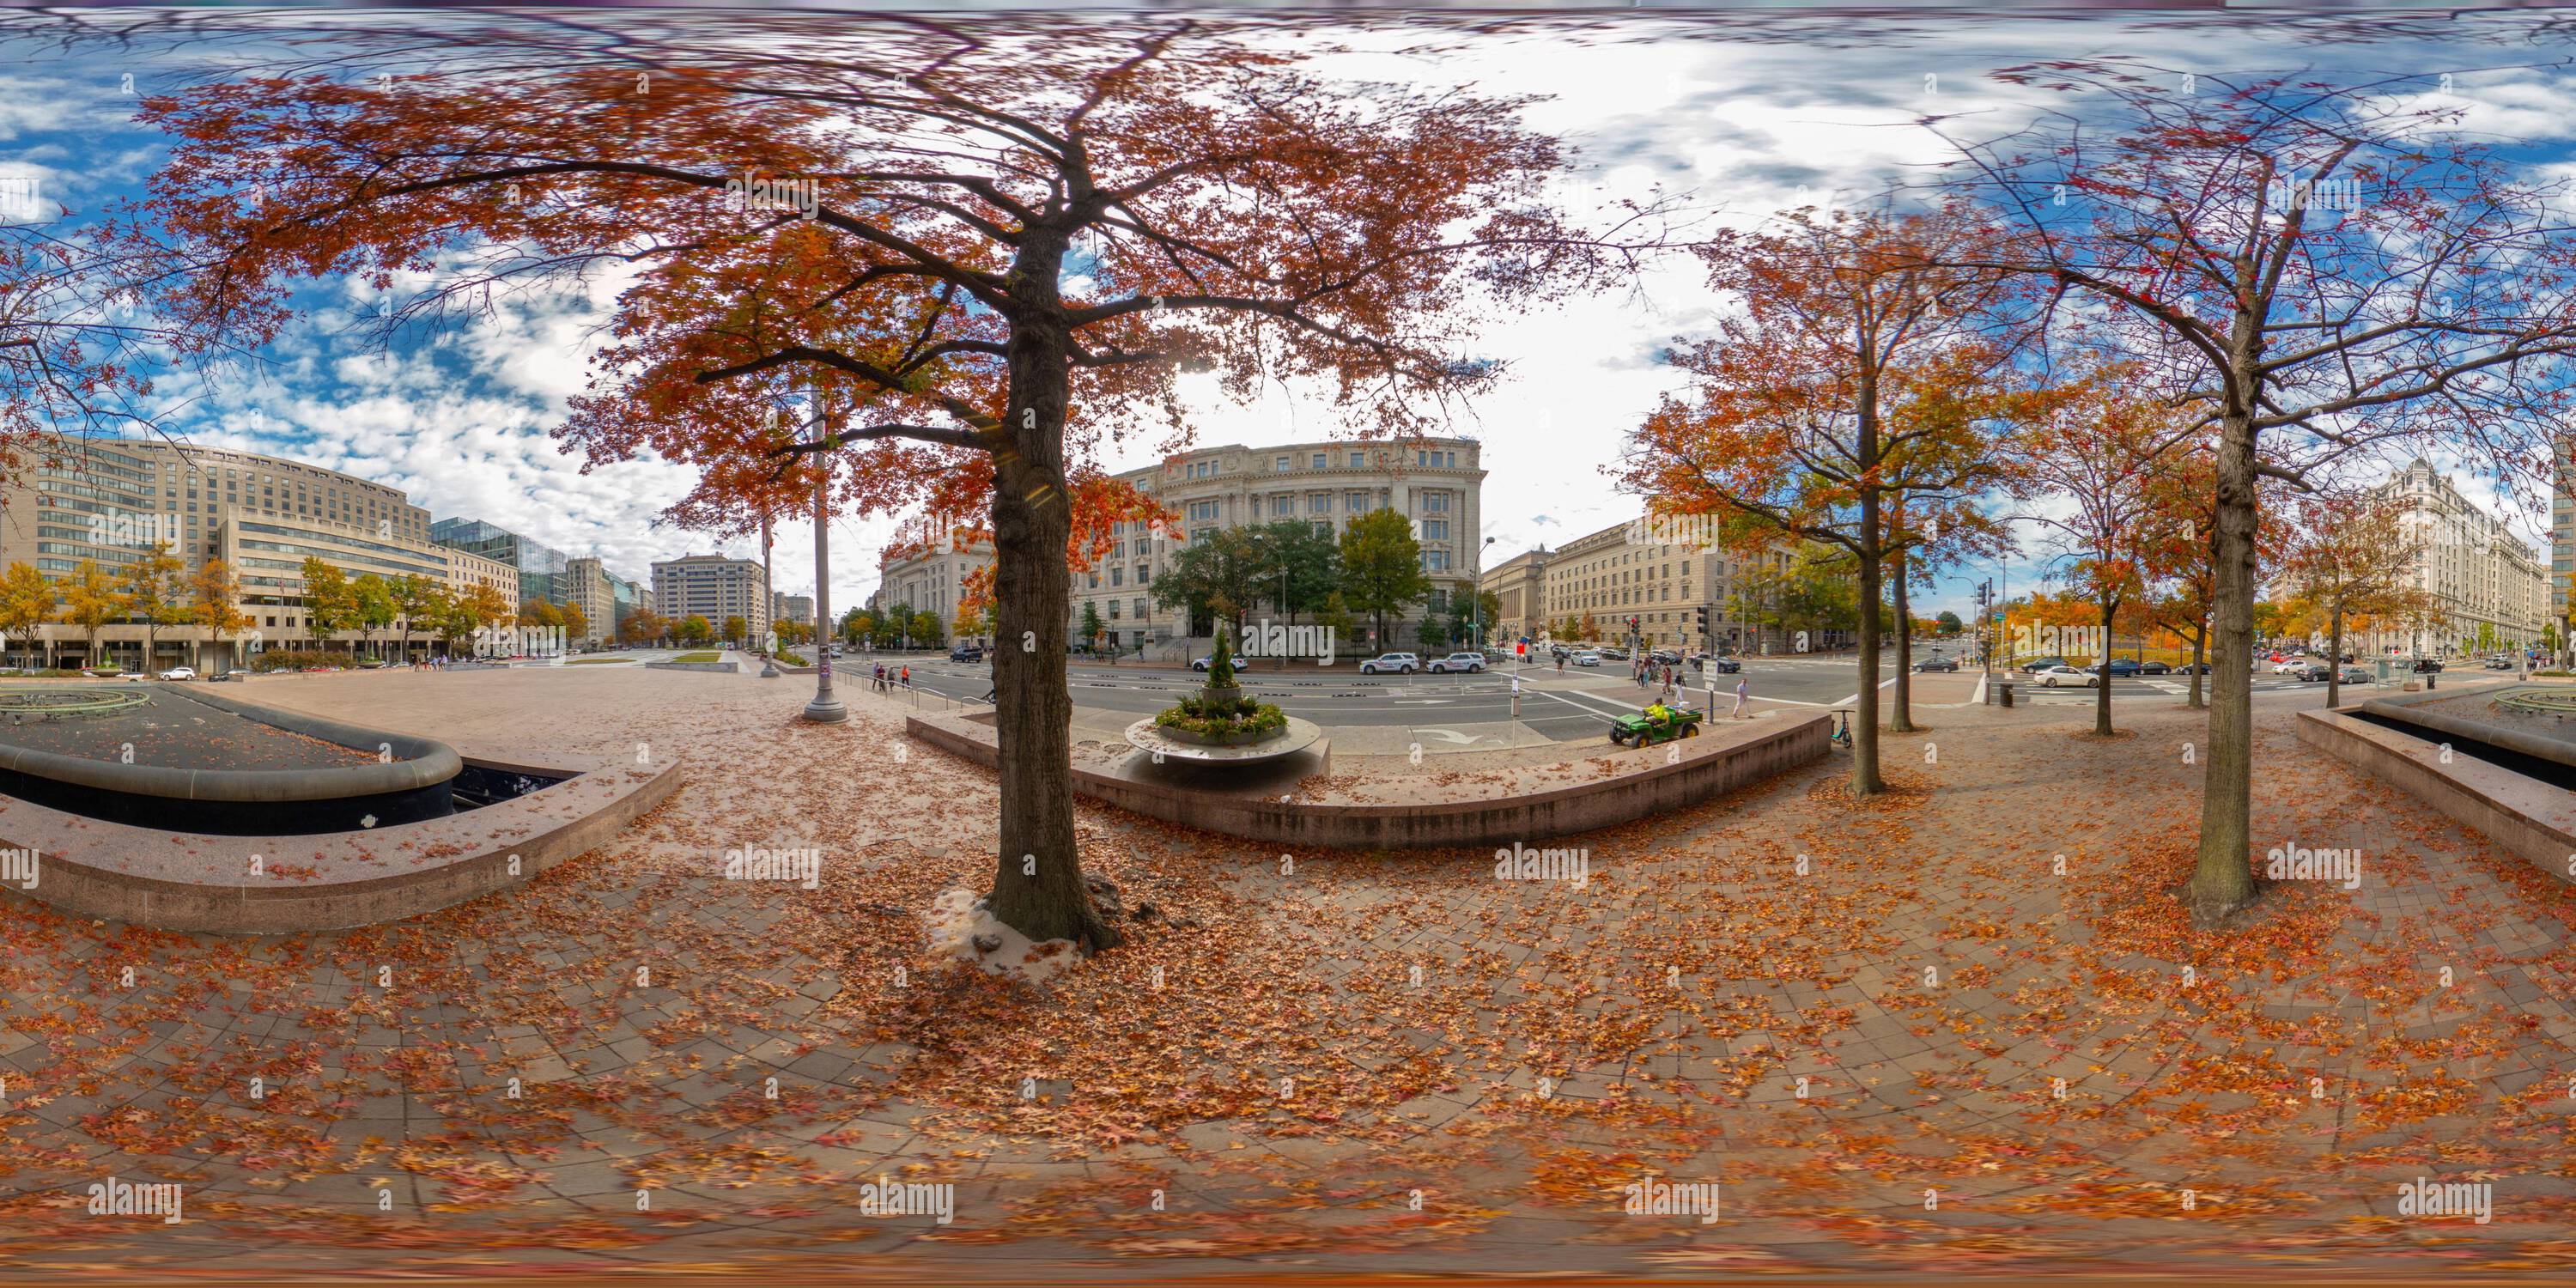 360 degree panoramic view of Washington DC, USA - October 28, 2023: Stock image of the Freedom Plaza Washington DC. 360 panorama VR equirectangular photo